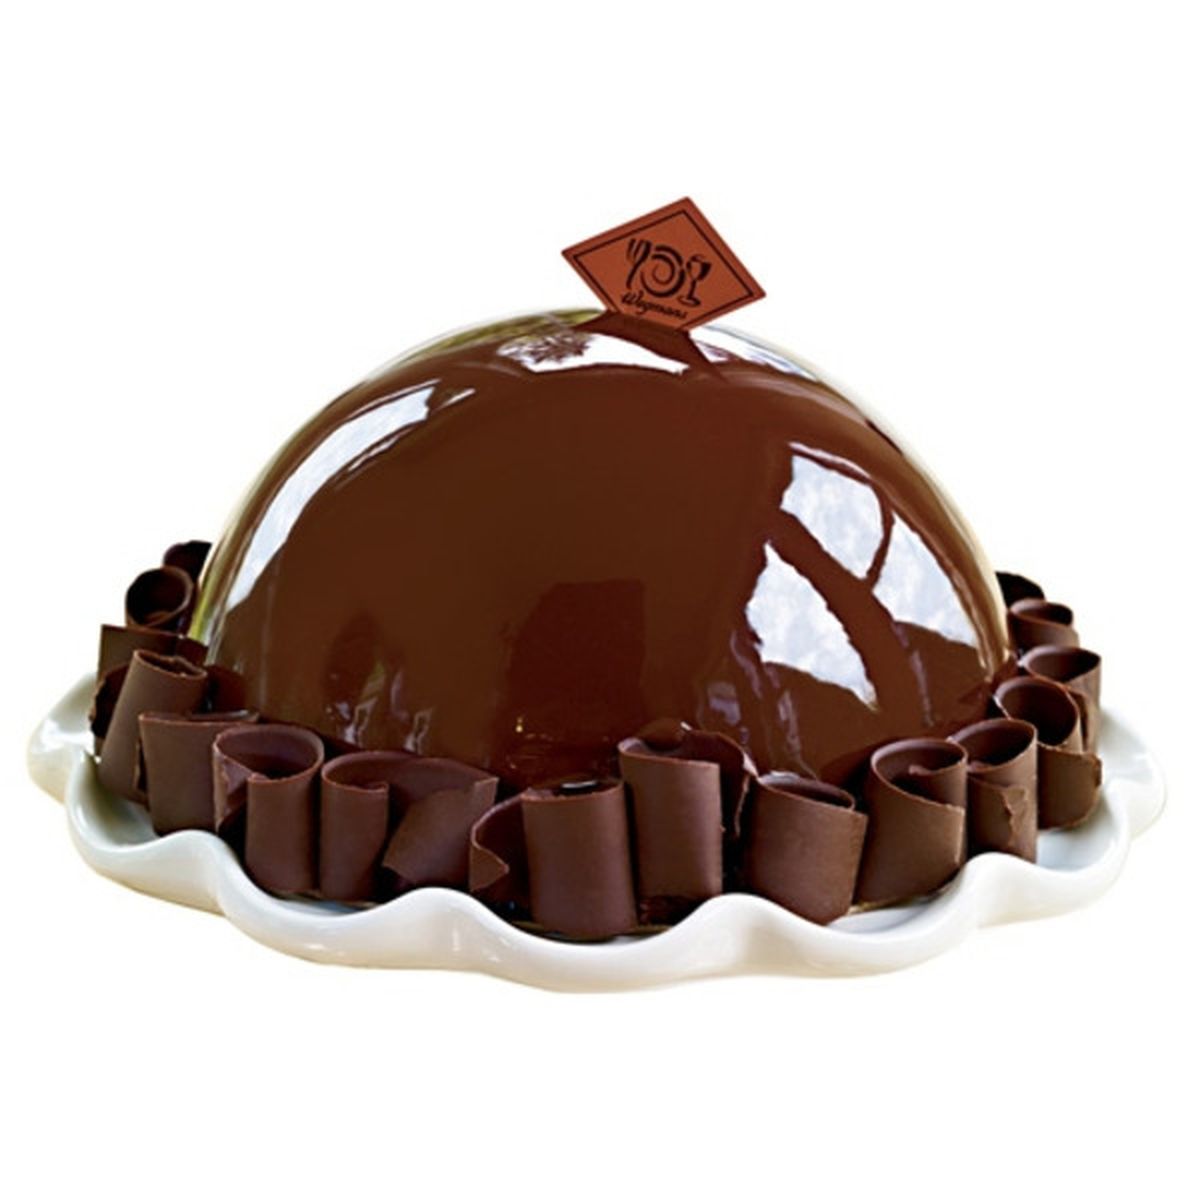 Calories in Wegmans Chocolate Dome